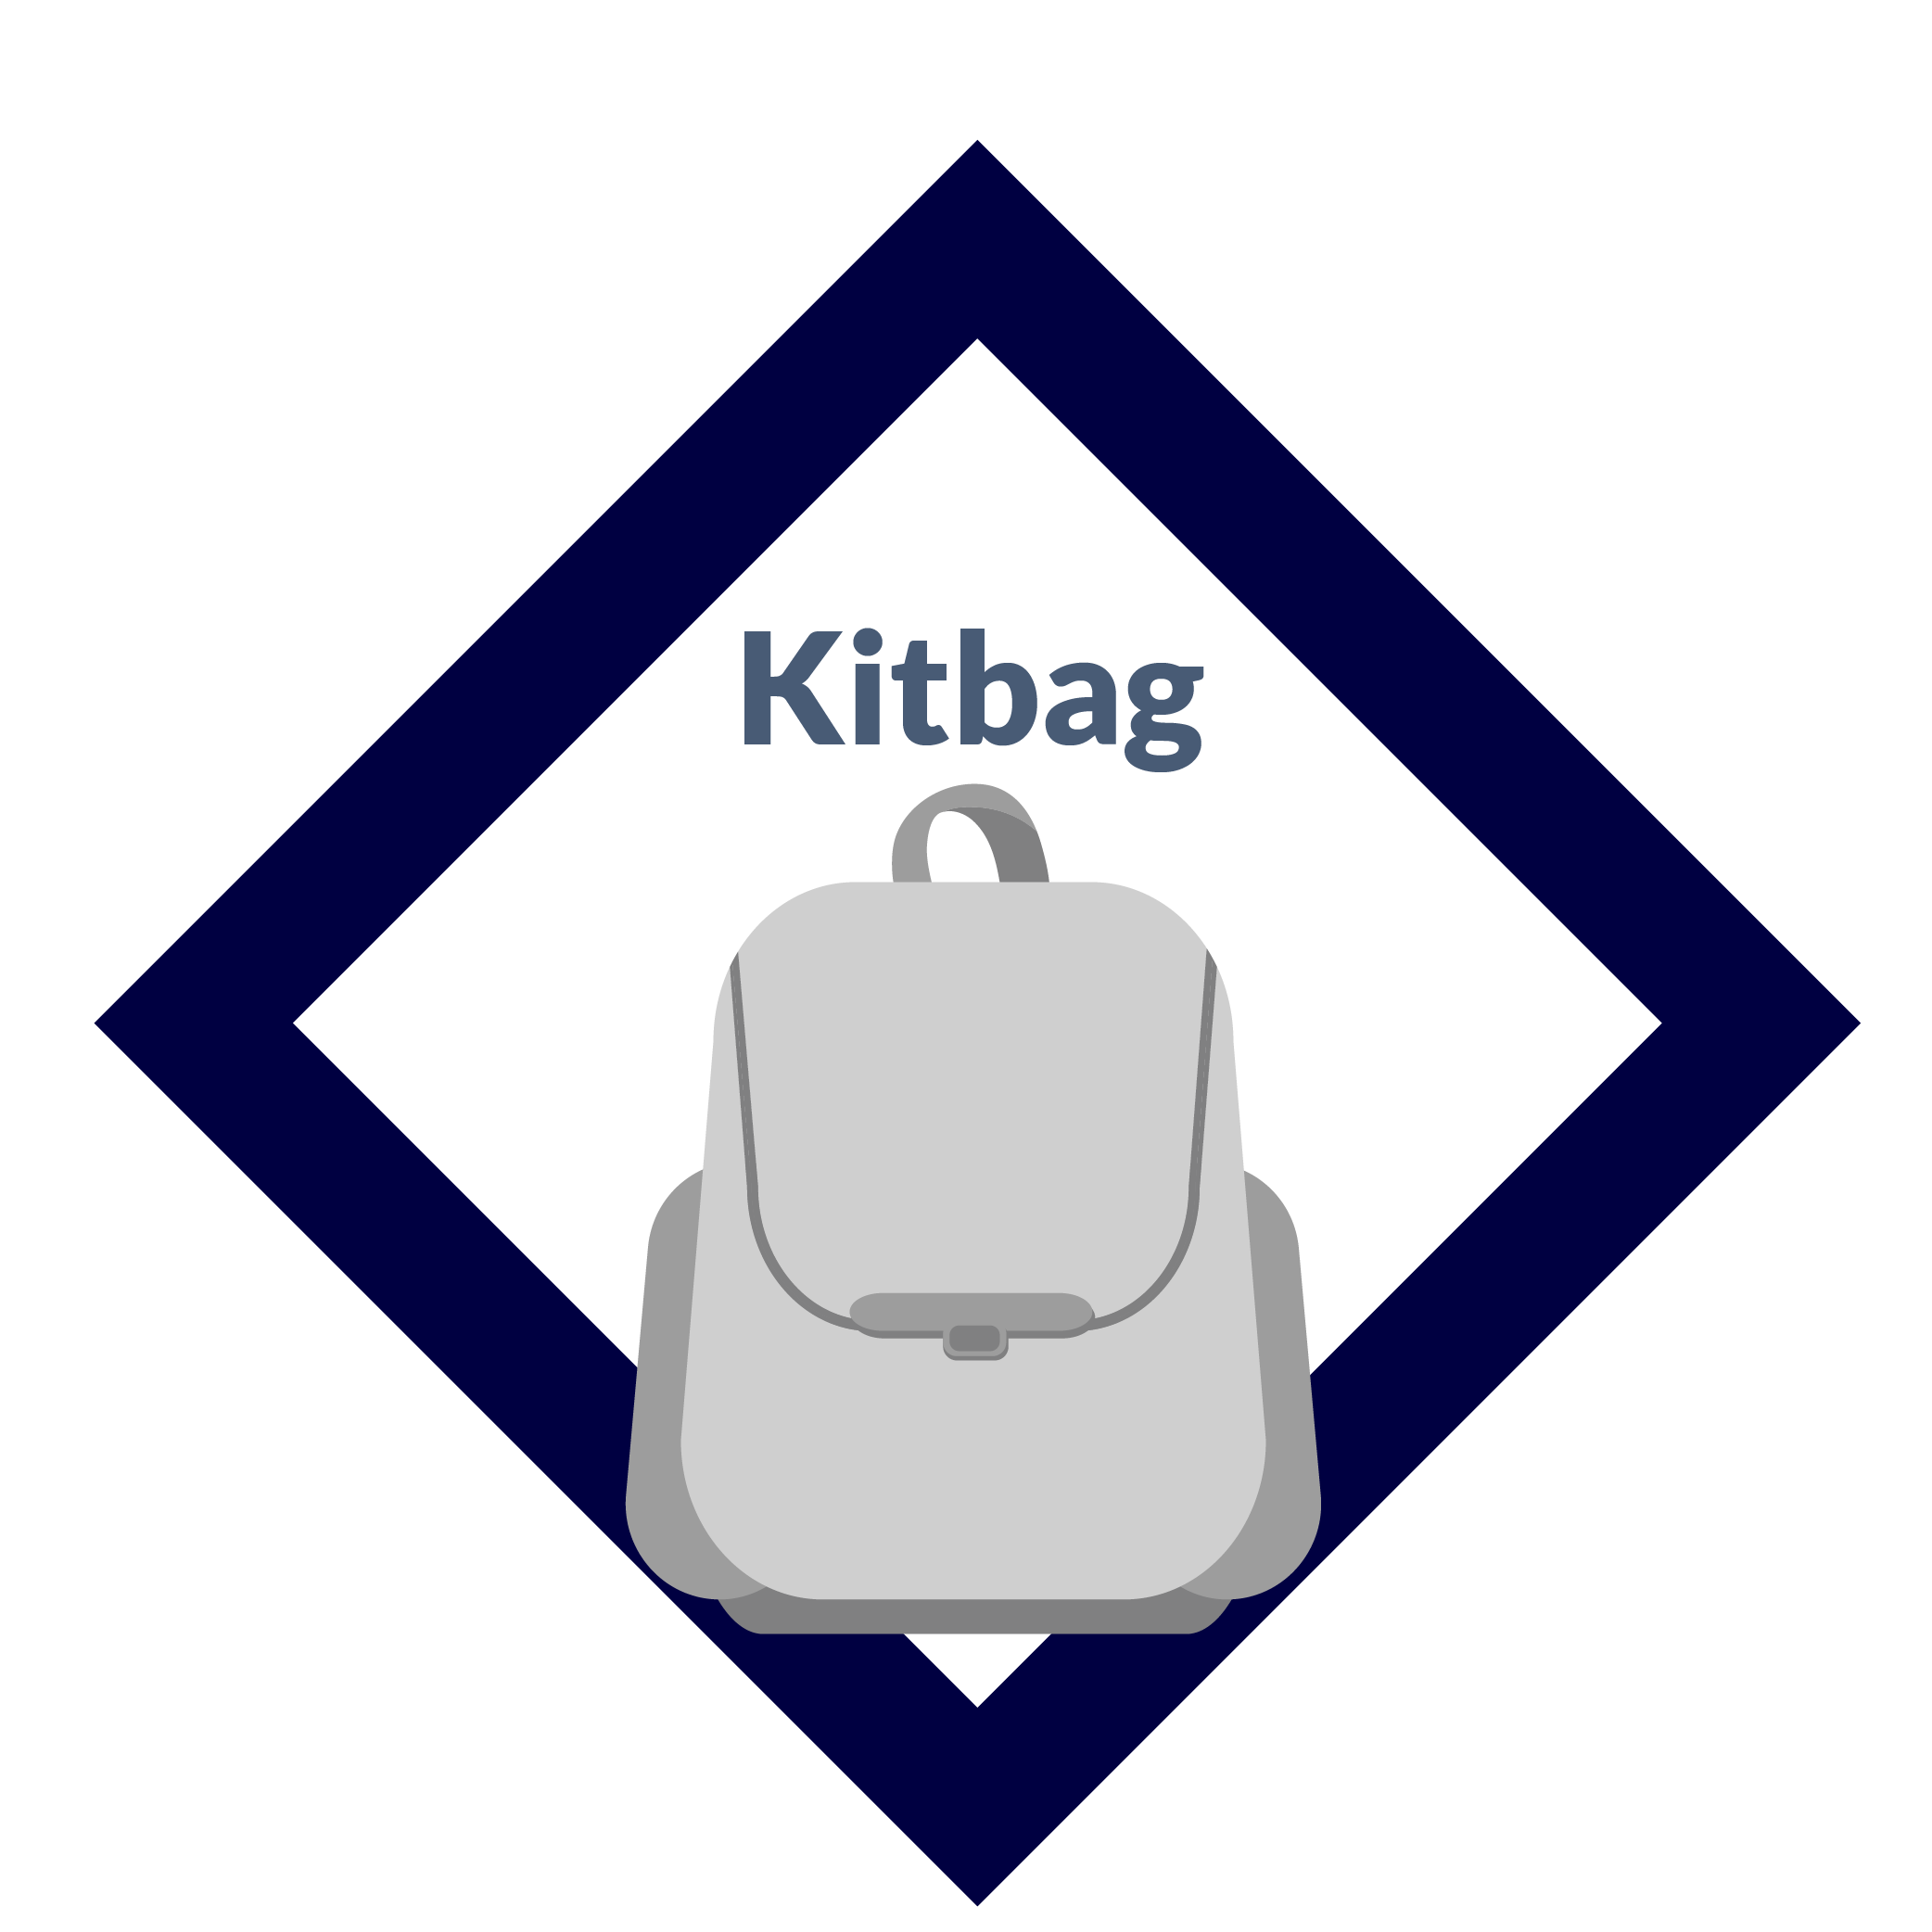 Kitbag - essential skills